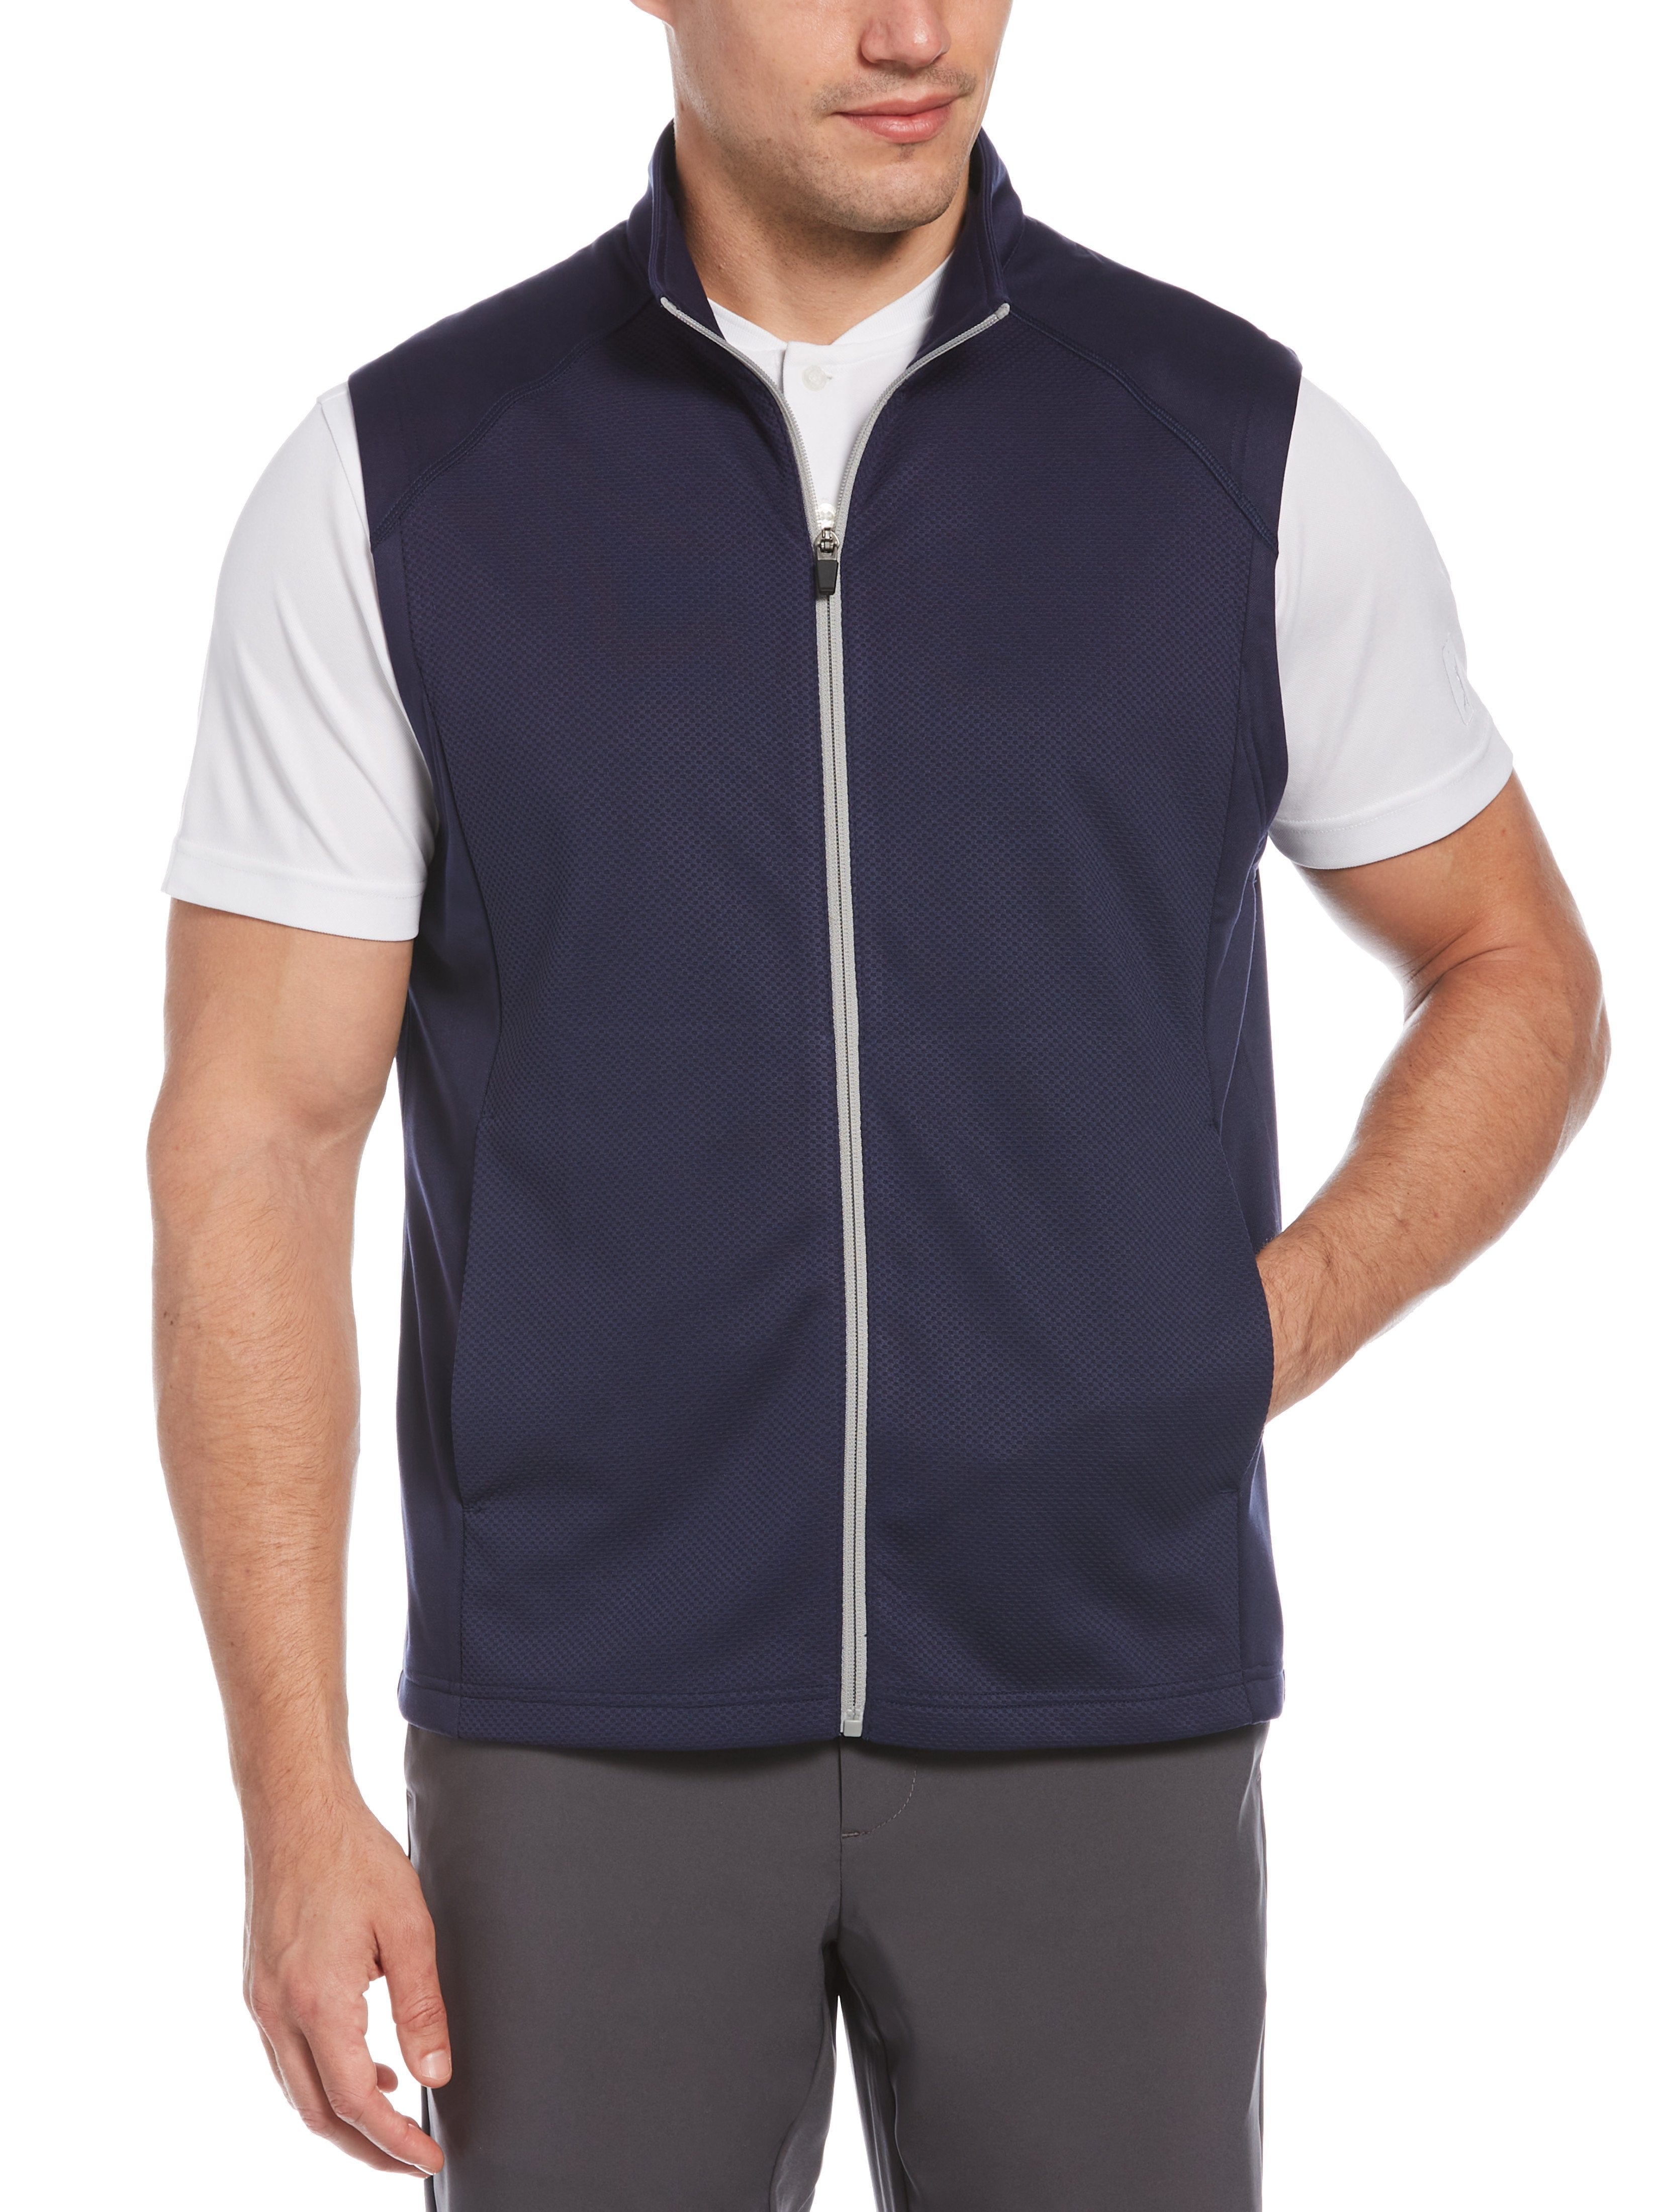 PGA TOUR Apparel Mens Mixed Texture Fleece Golf Vest Top, Size Medium, Navy Blue, 100% Polyester | Golf Apparel Shop